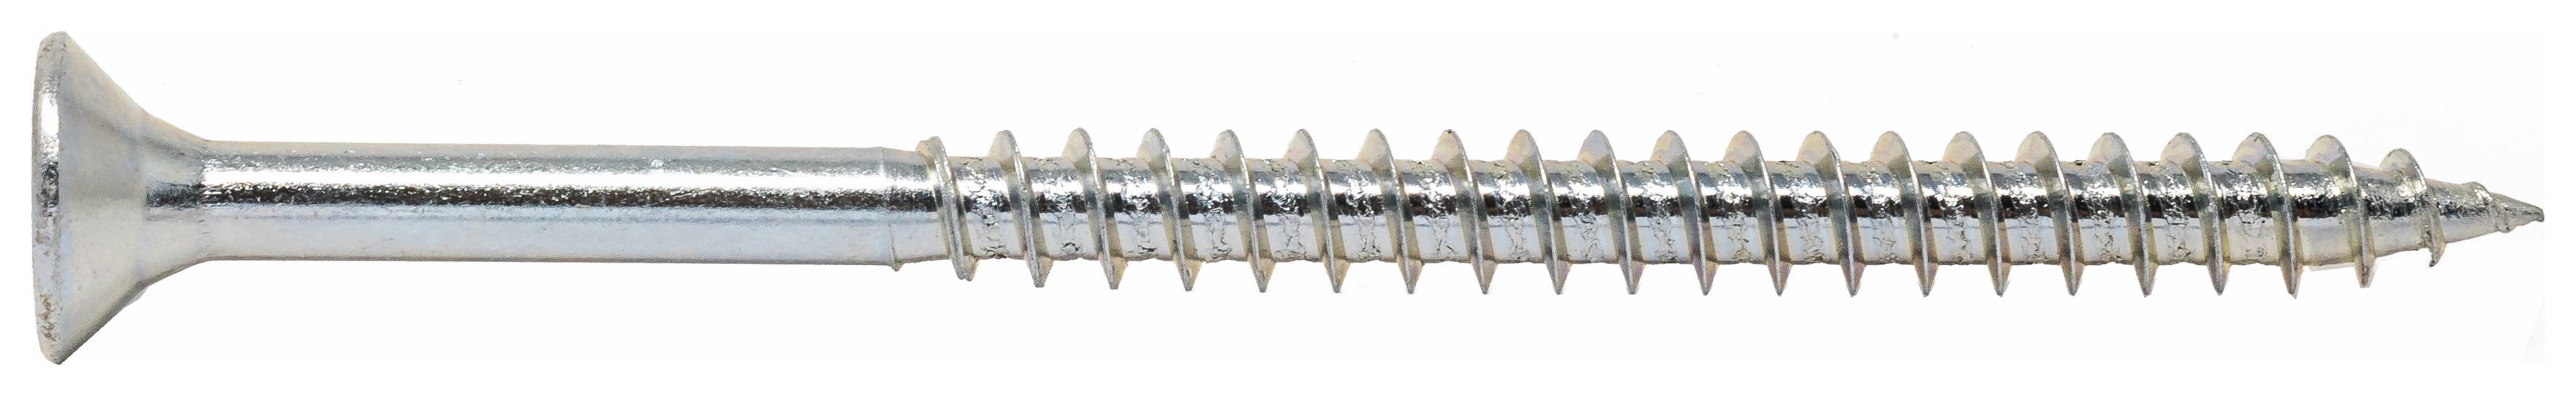 Wickes Single Thread Zinc Plated Screw - 4